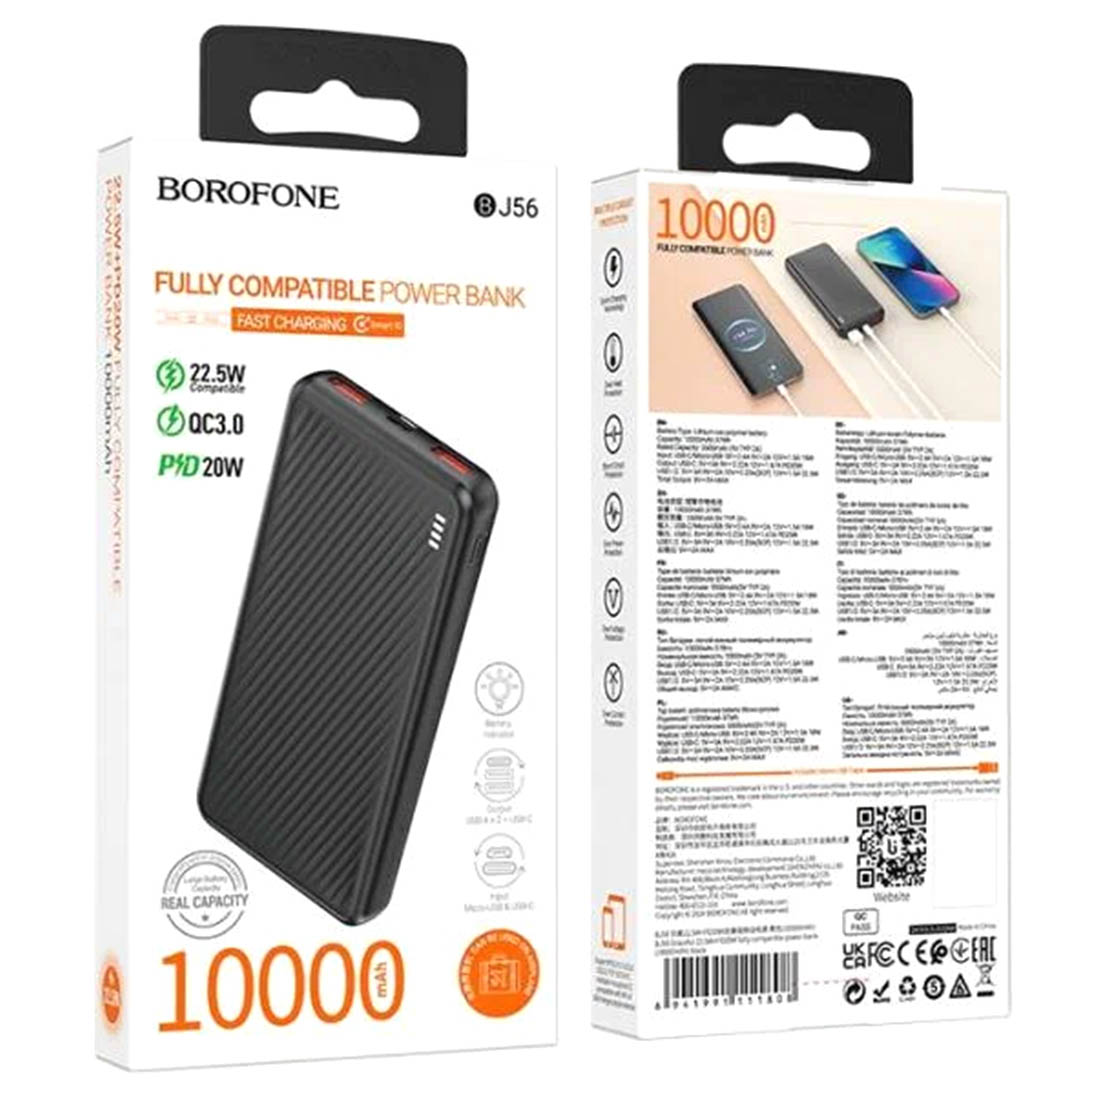 Внешний портативный аккумулятор, Power Bank BOROFONE BJ56, 10000 mAh, 22.5W, PD20W, QC3.0, LED дисплей, цвет черный